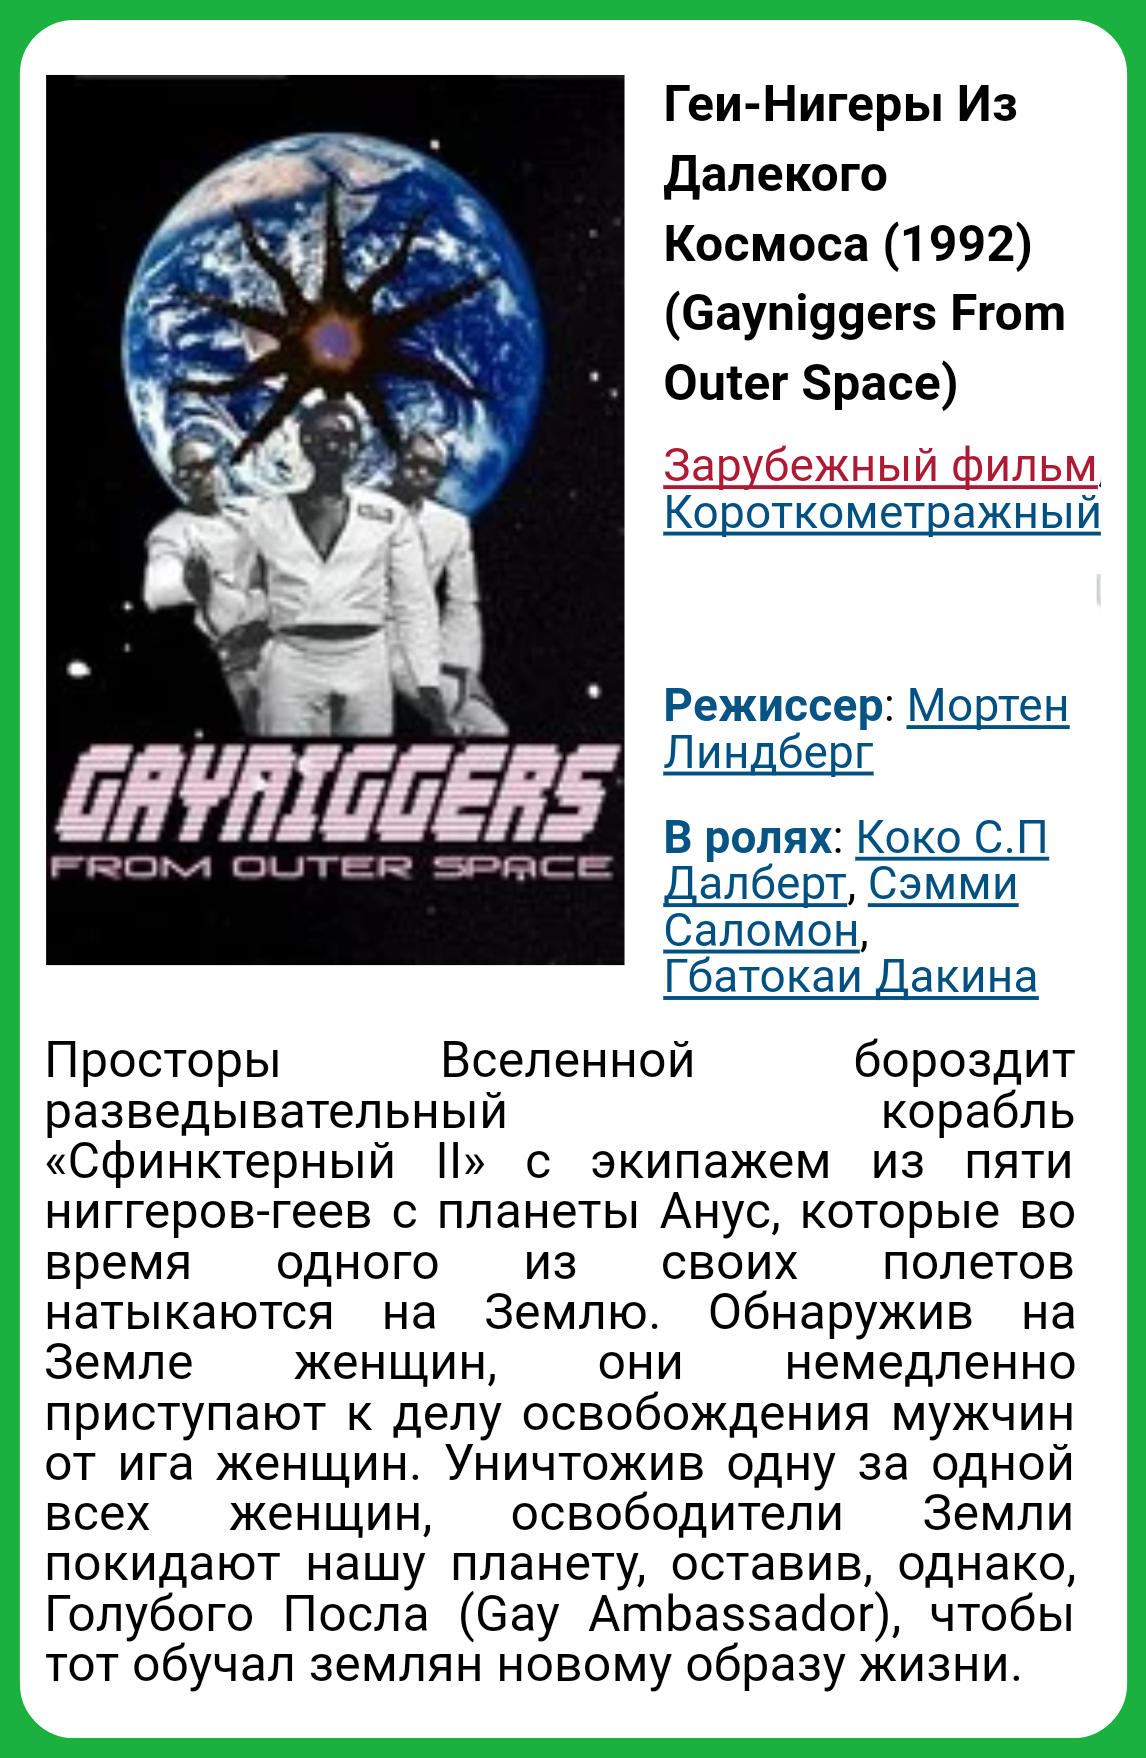 Film description - Movies, , Gays